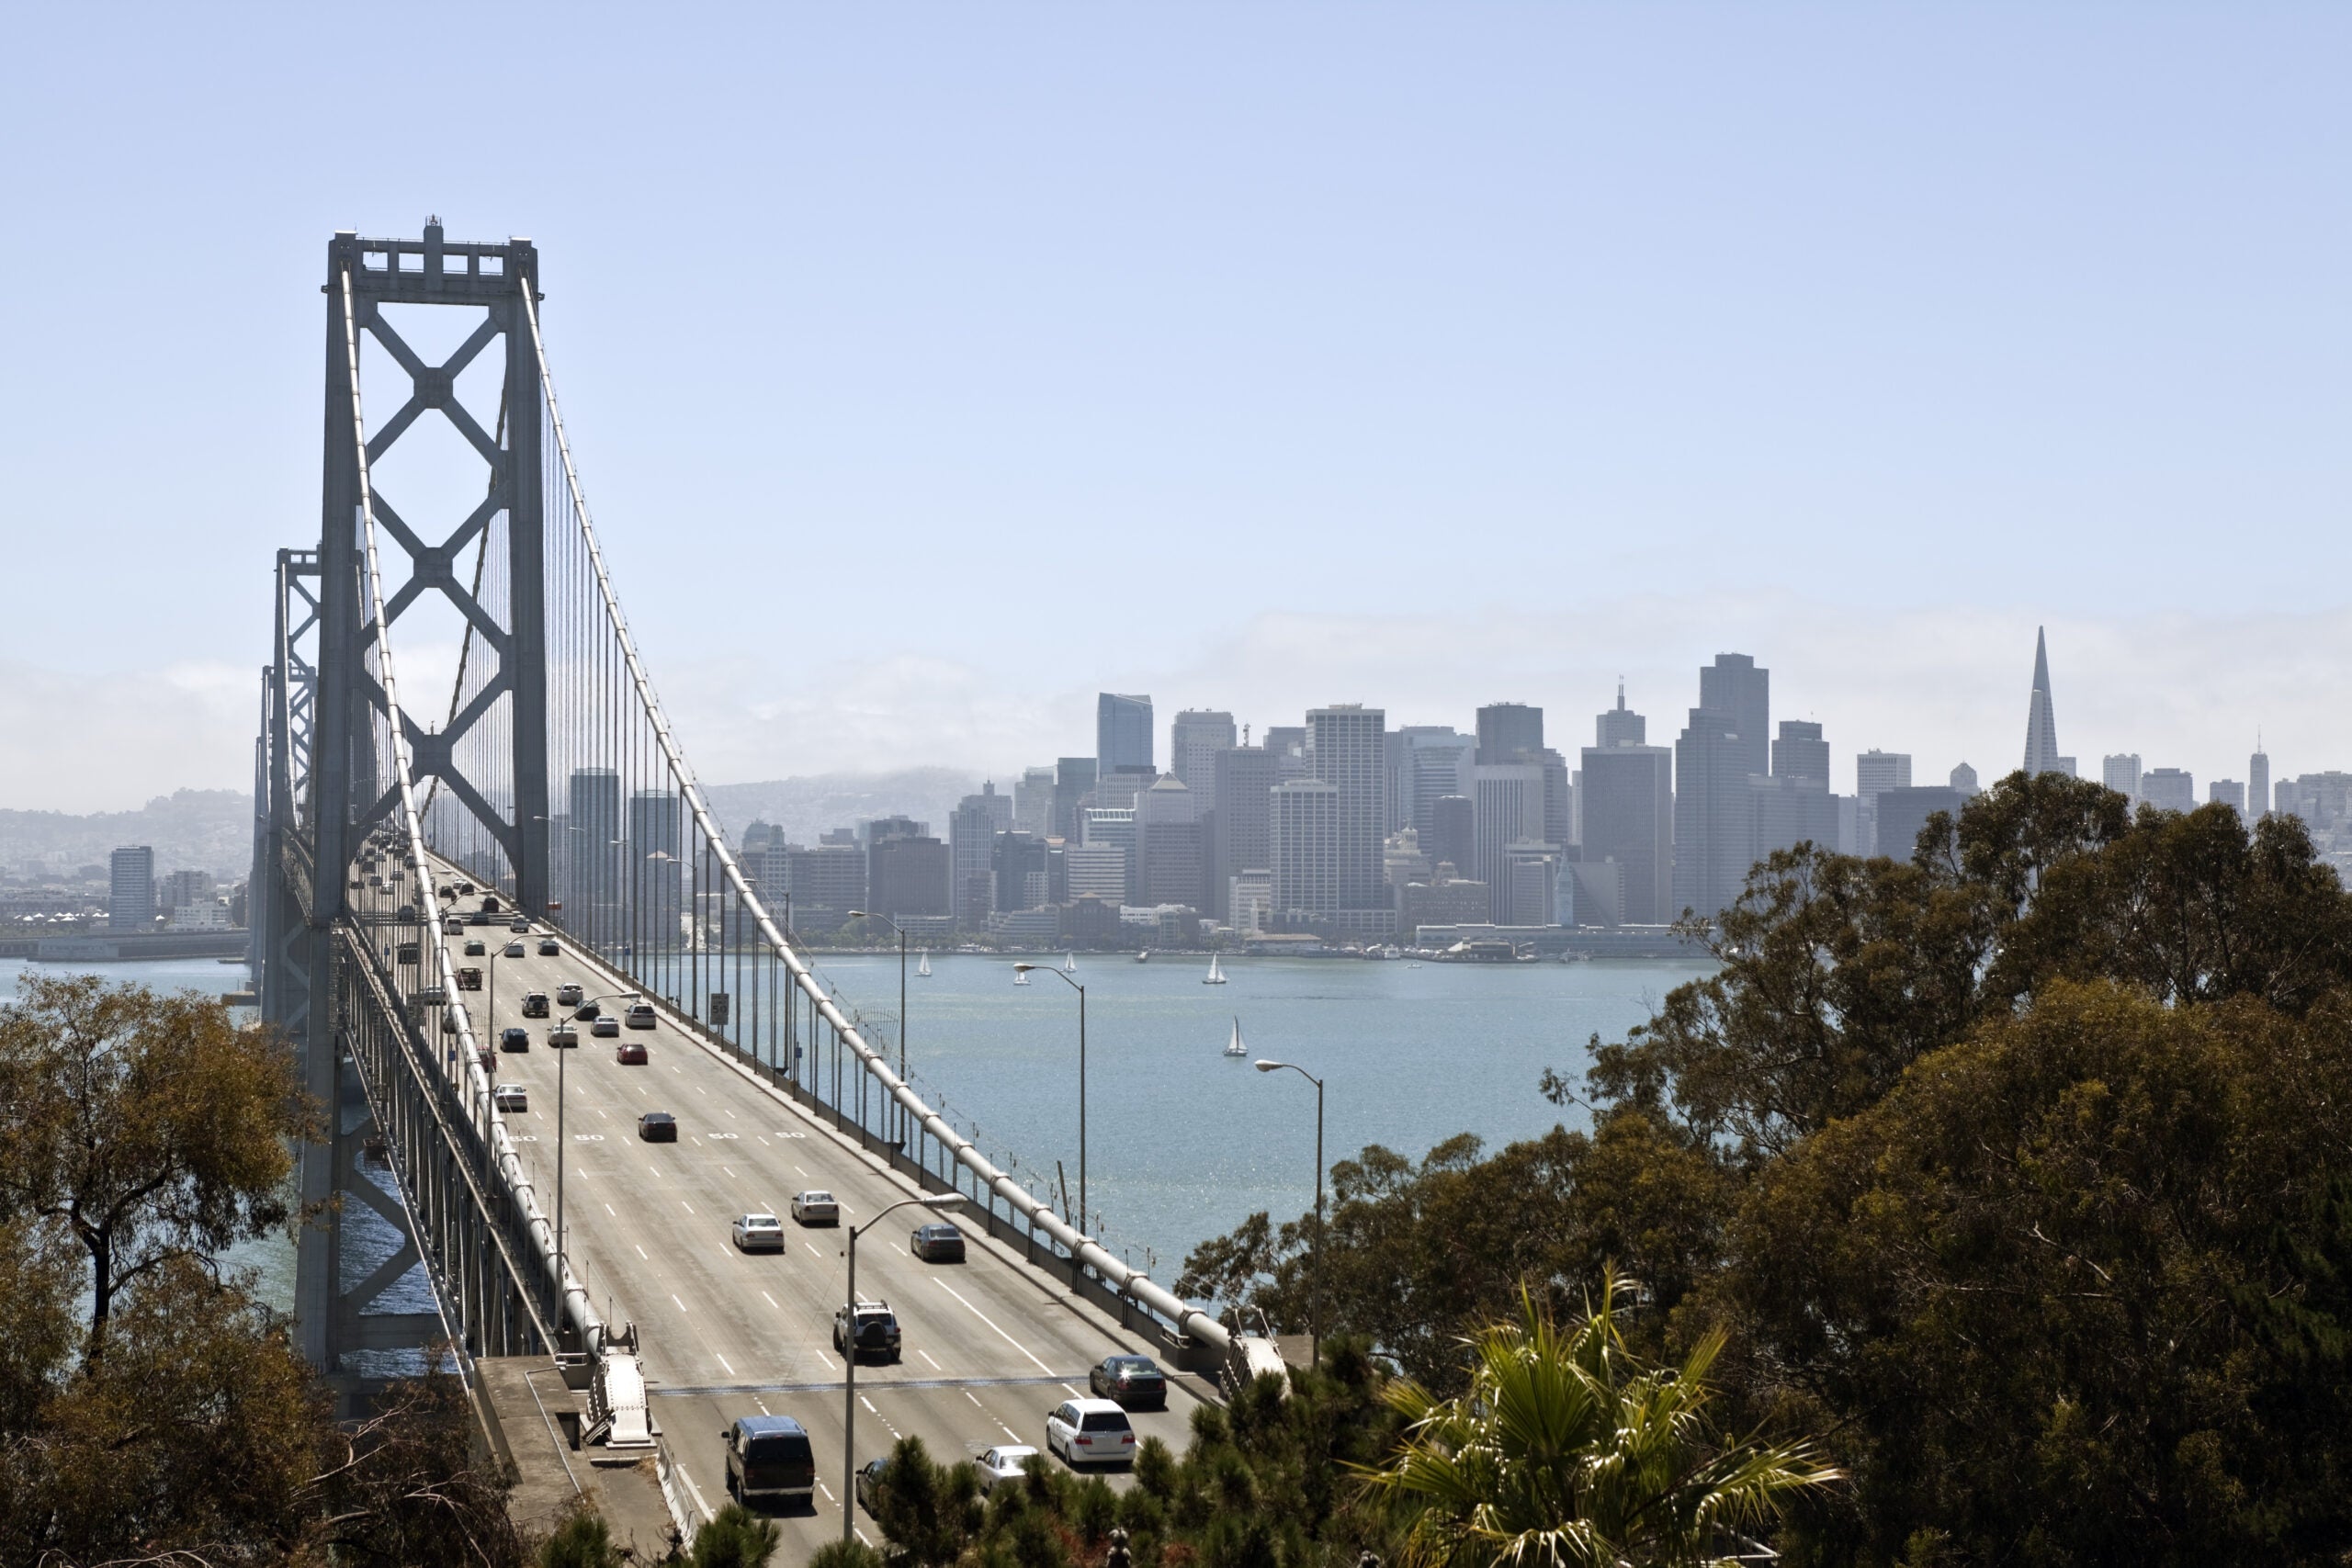 Traffic moves freely across the Bay Bridge towards San Francisco.
(trekandshoot / Shutterstock)